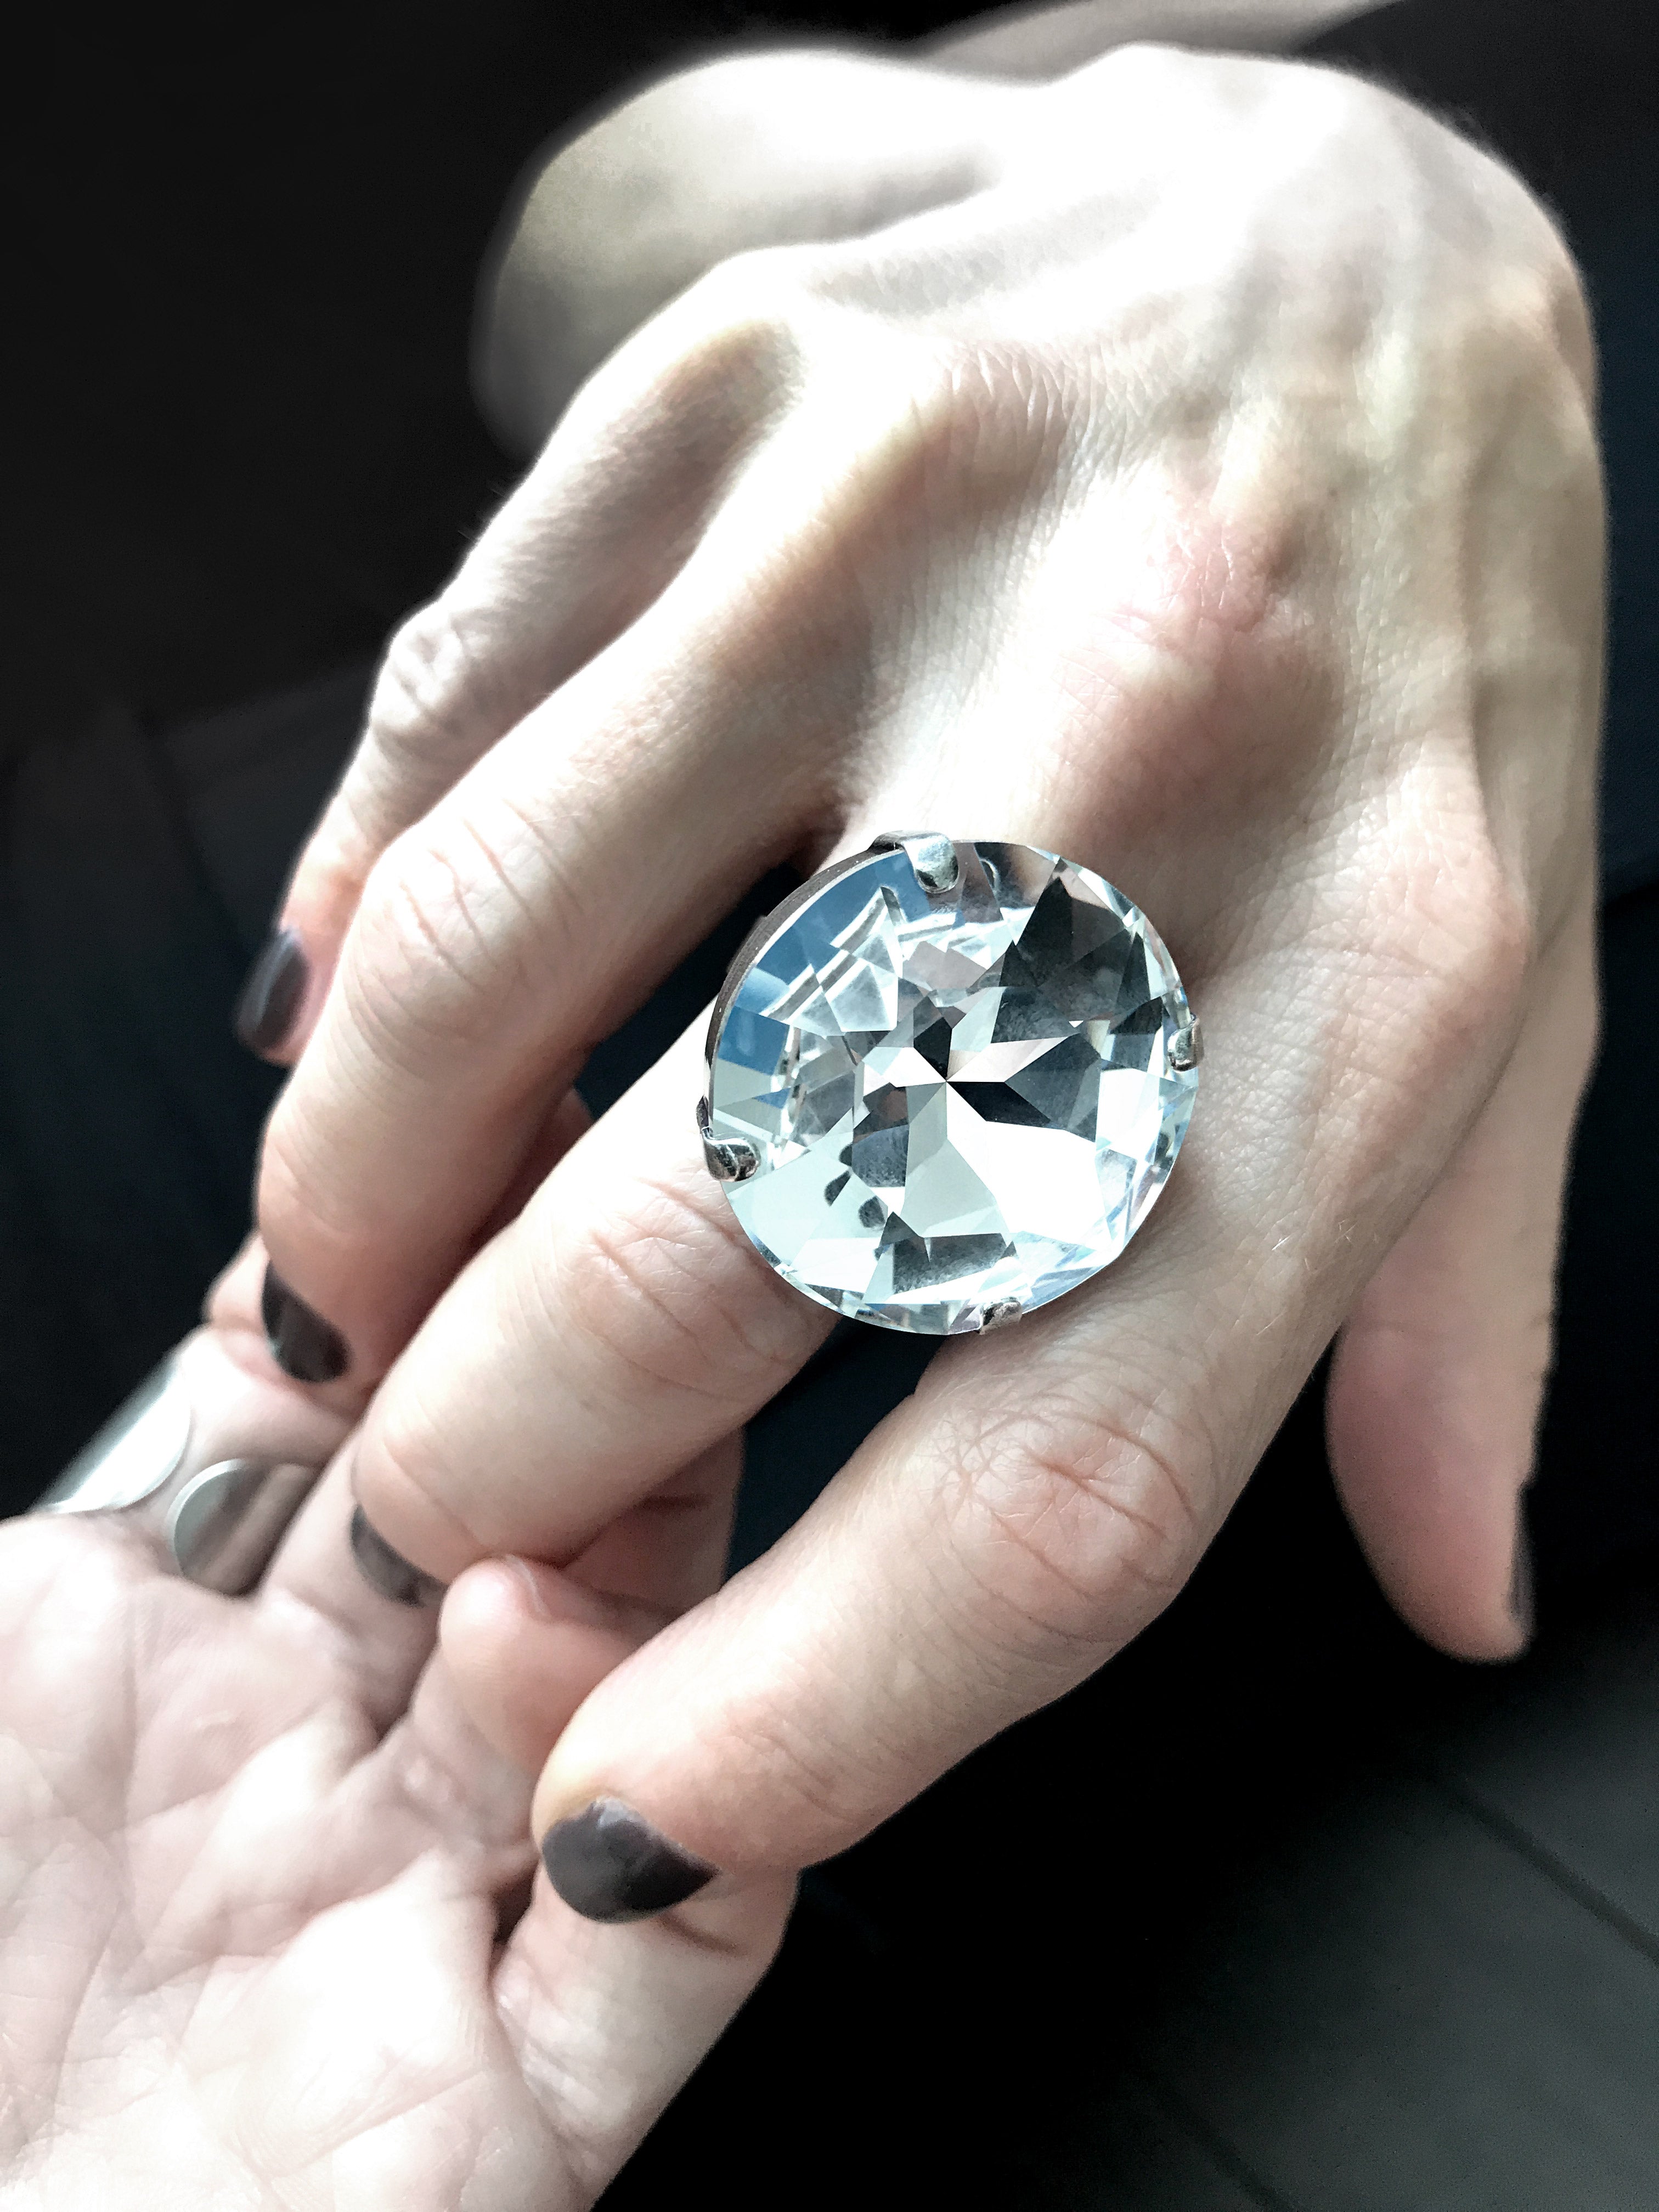 DARING, DARLING - Large Round Brilliant Crystal Cocktail Ring